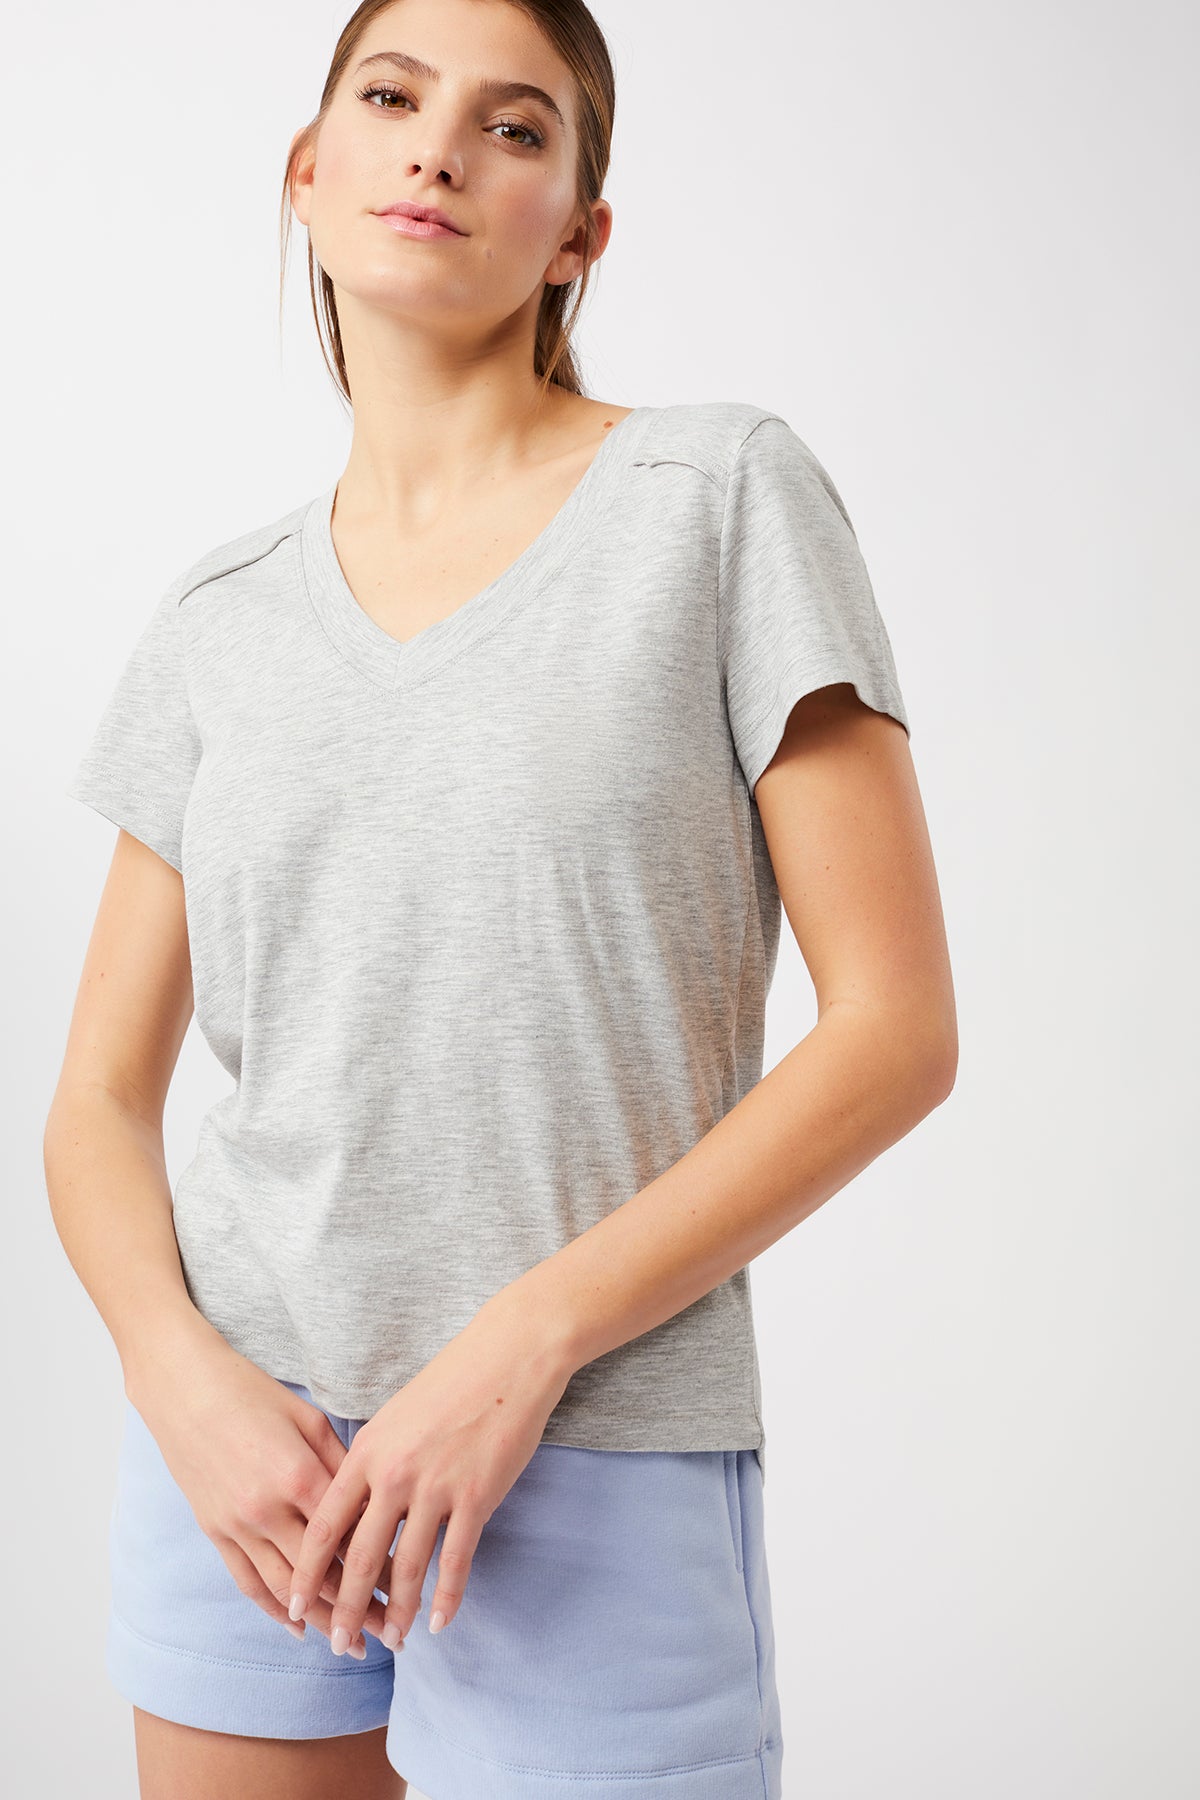 Mandala Yoga Shirt Grau Front - The New V-Neck